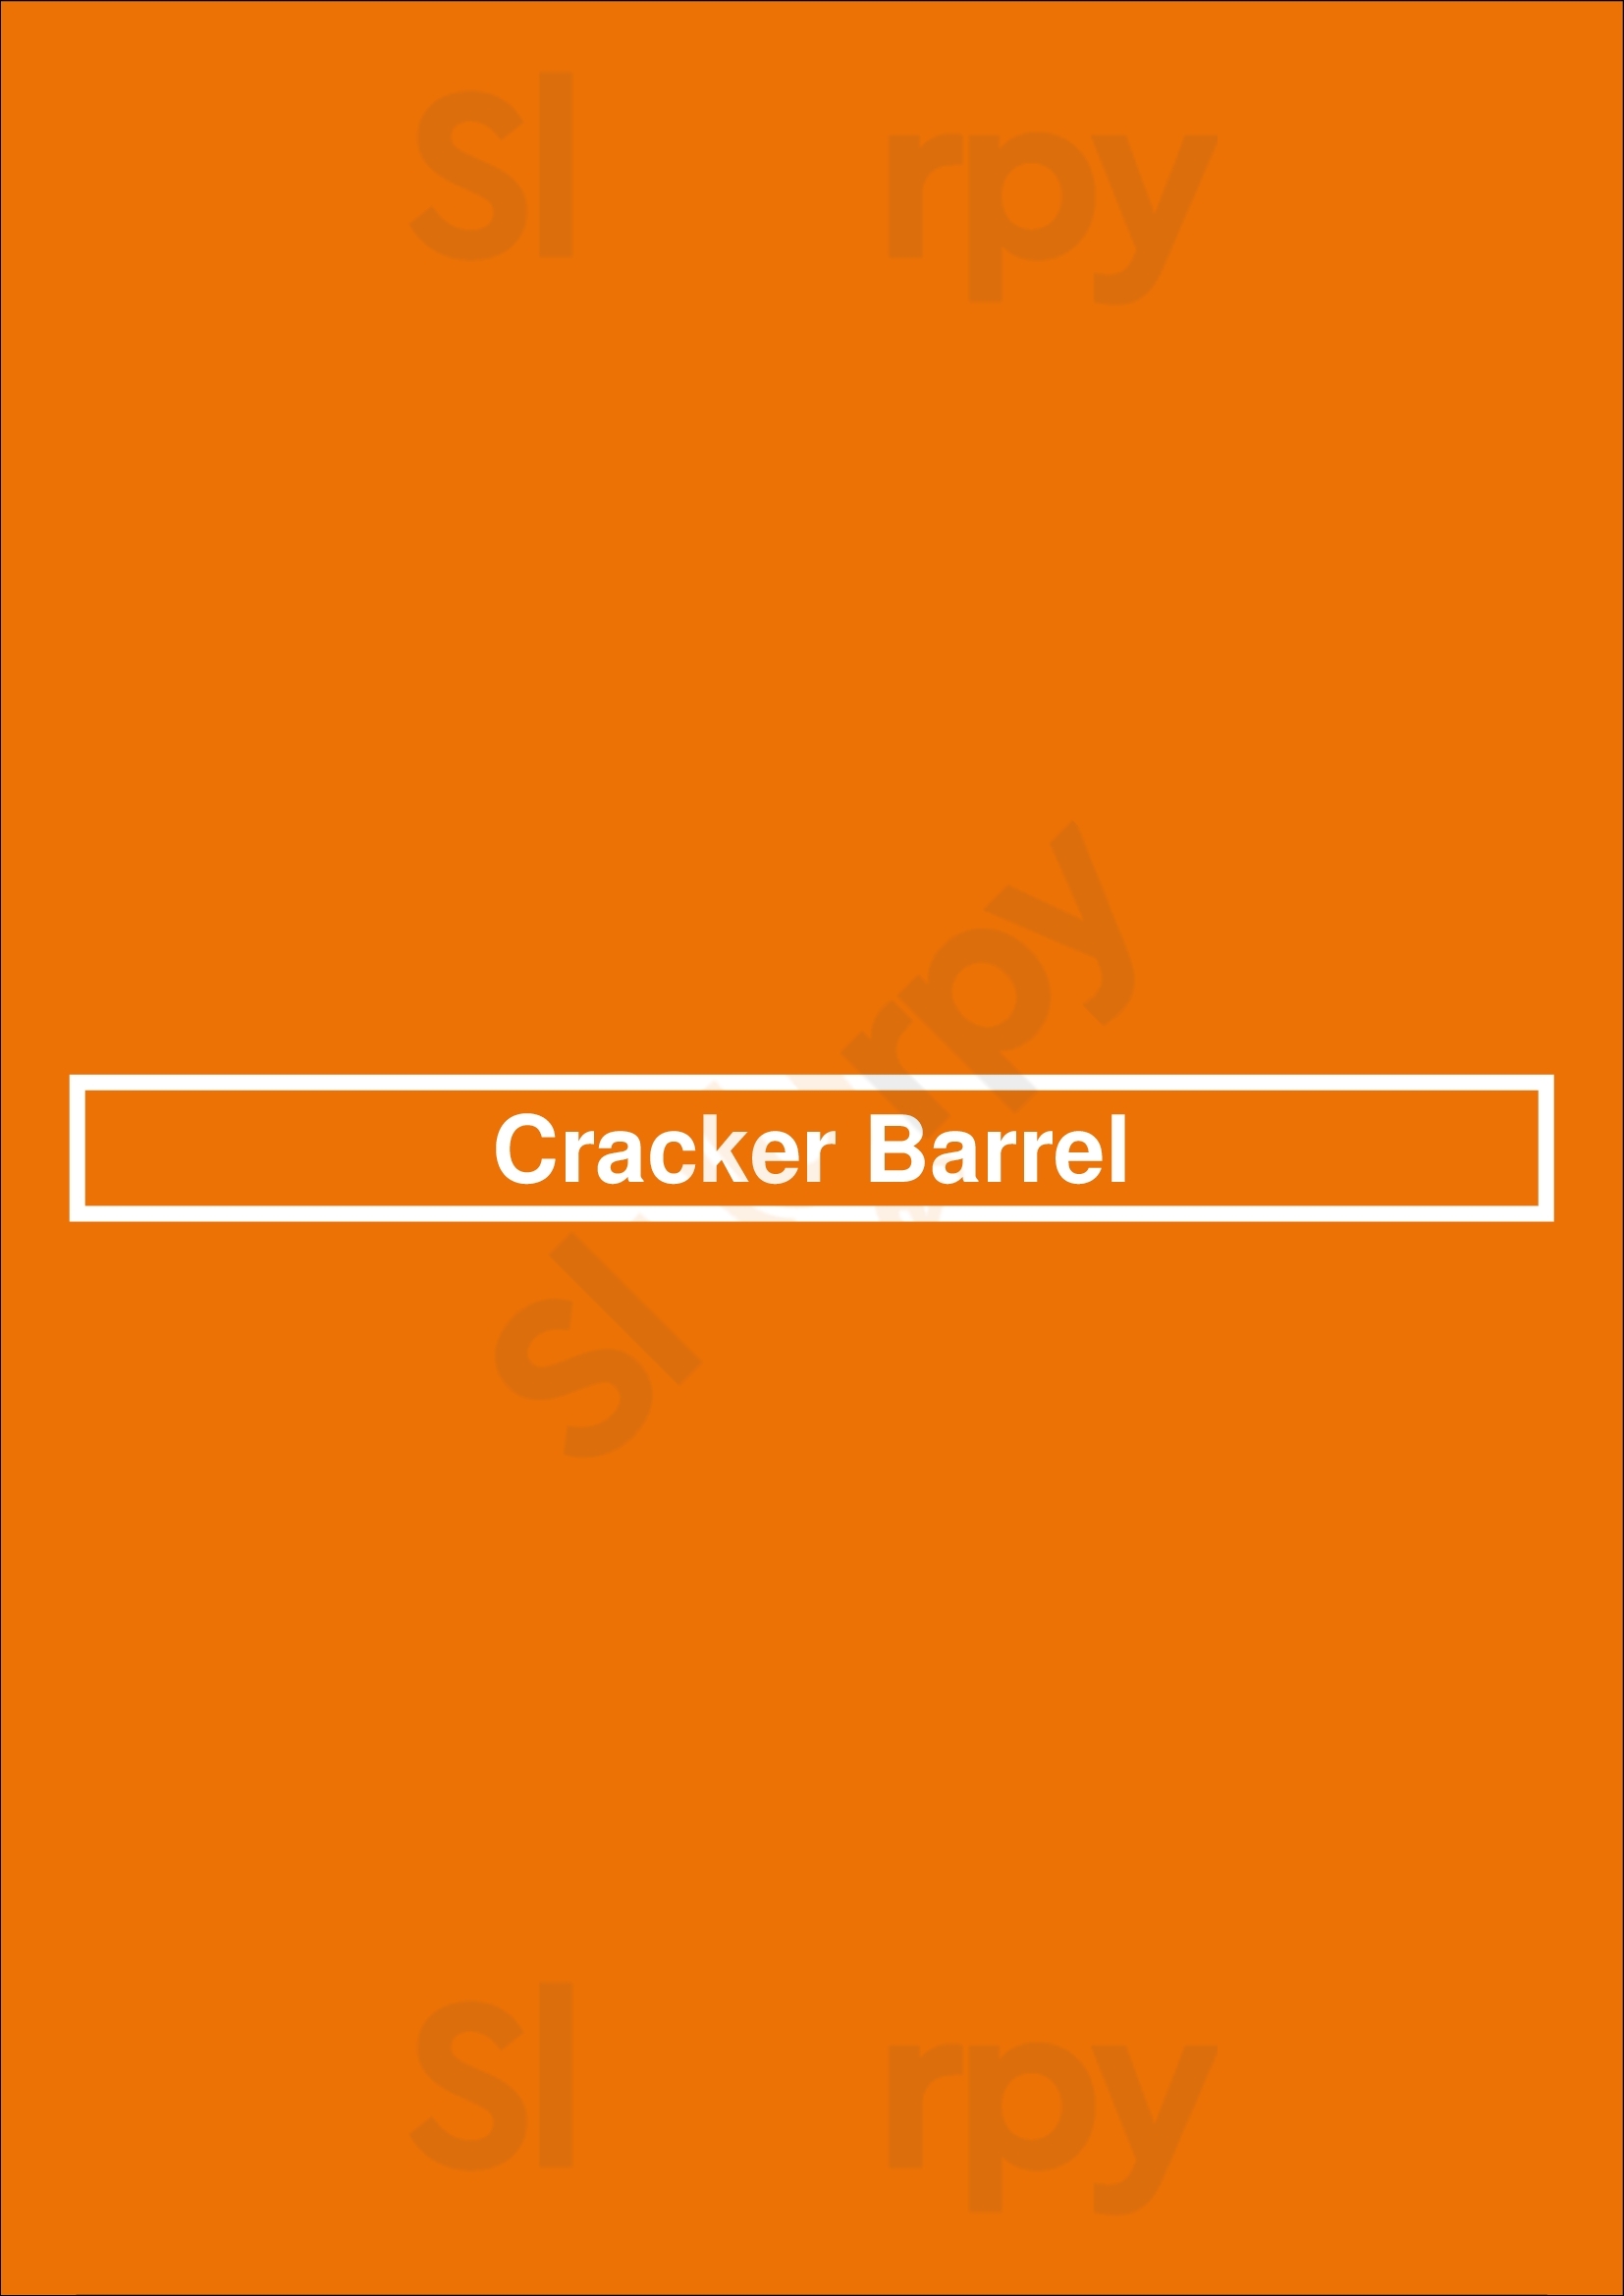 Cracker Barrel Virginia Beach Menu - 1